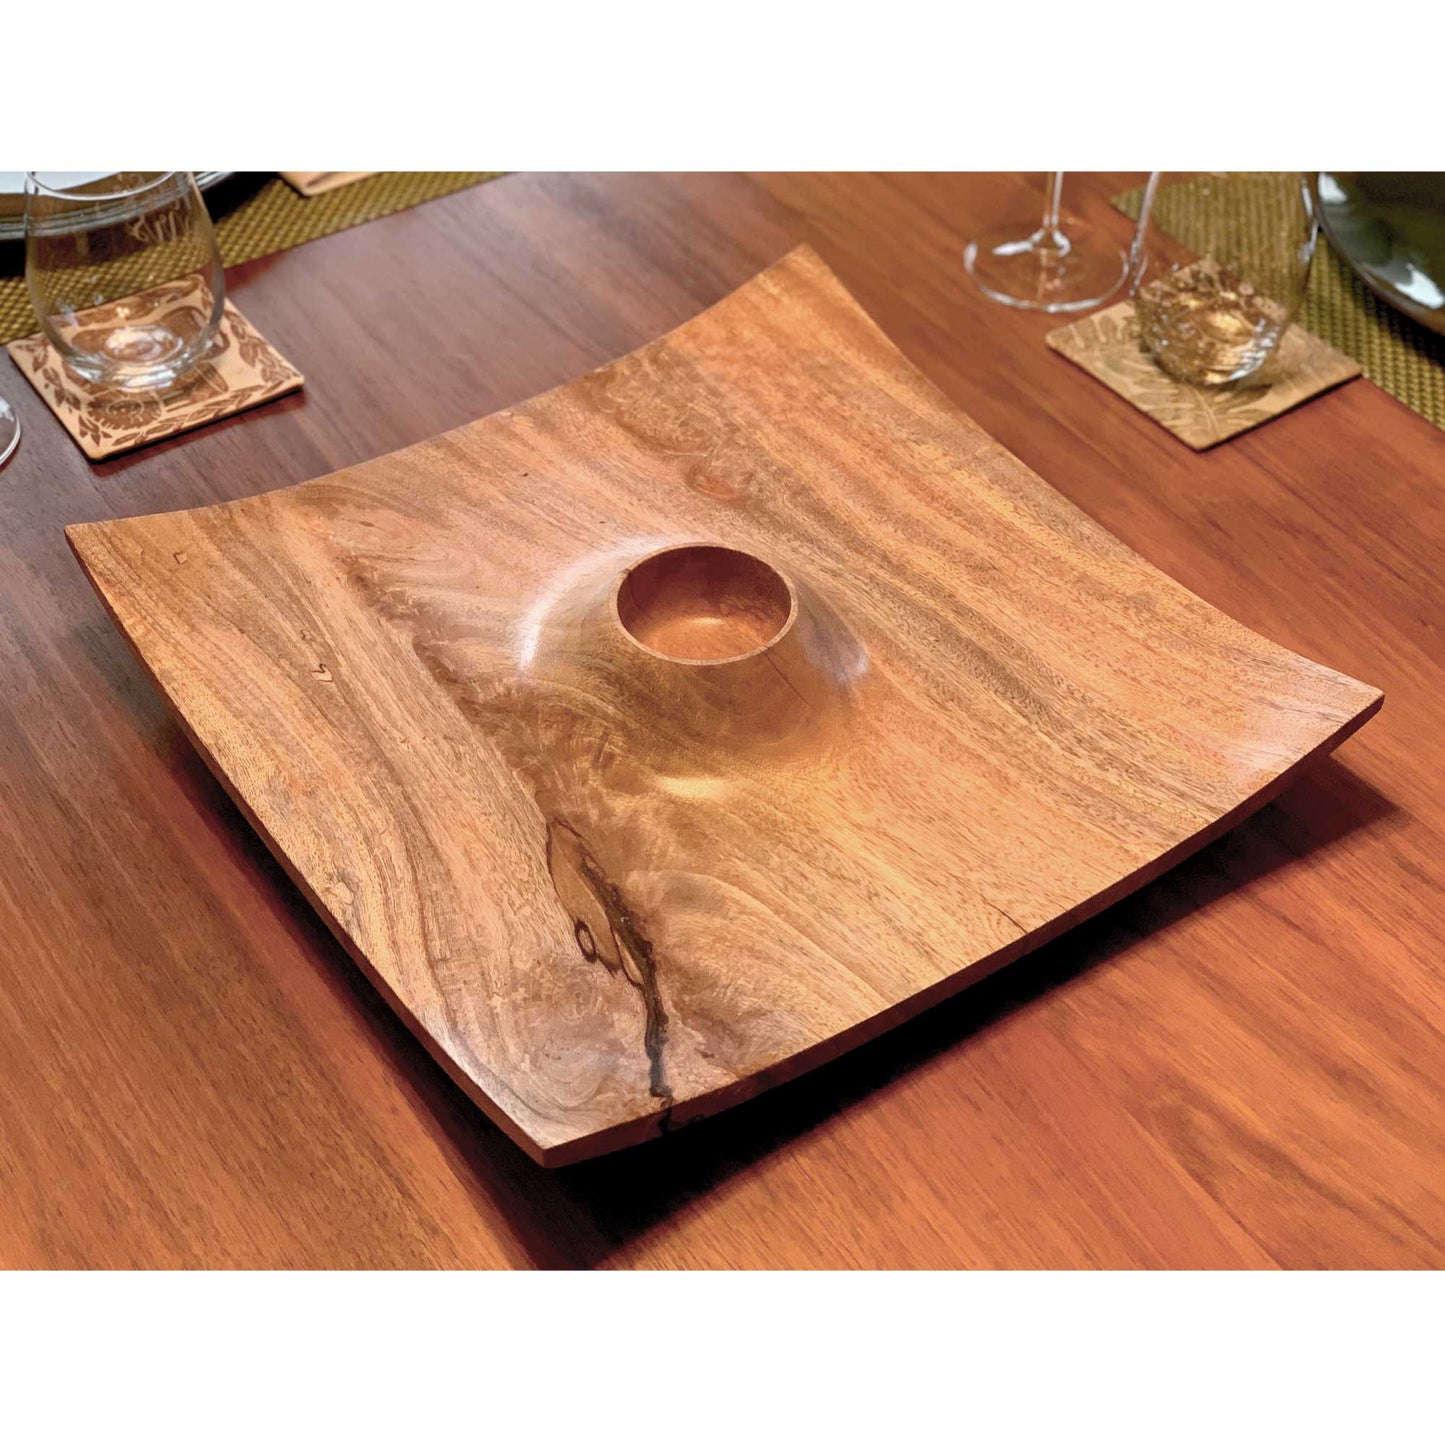 Wood Sushi Platter